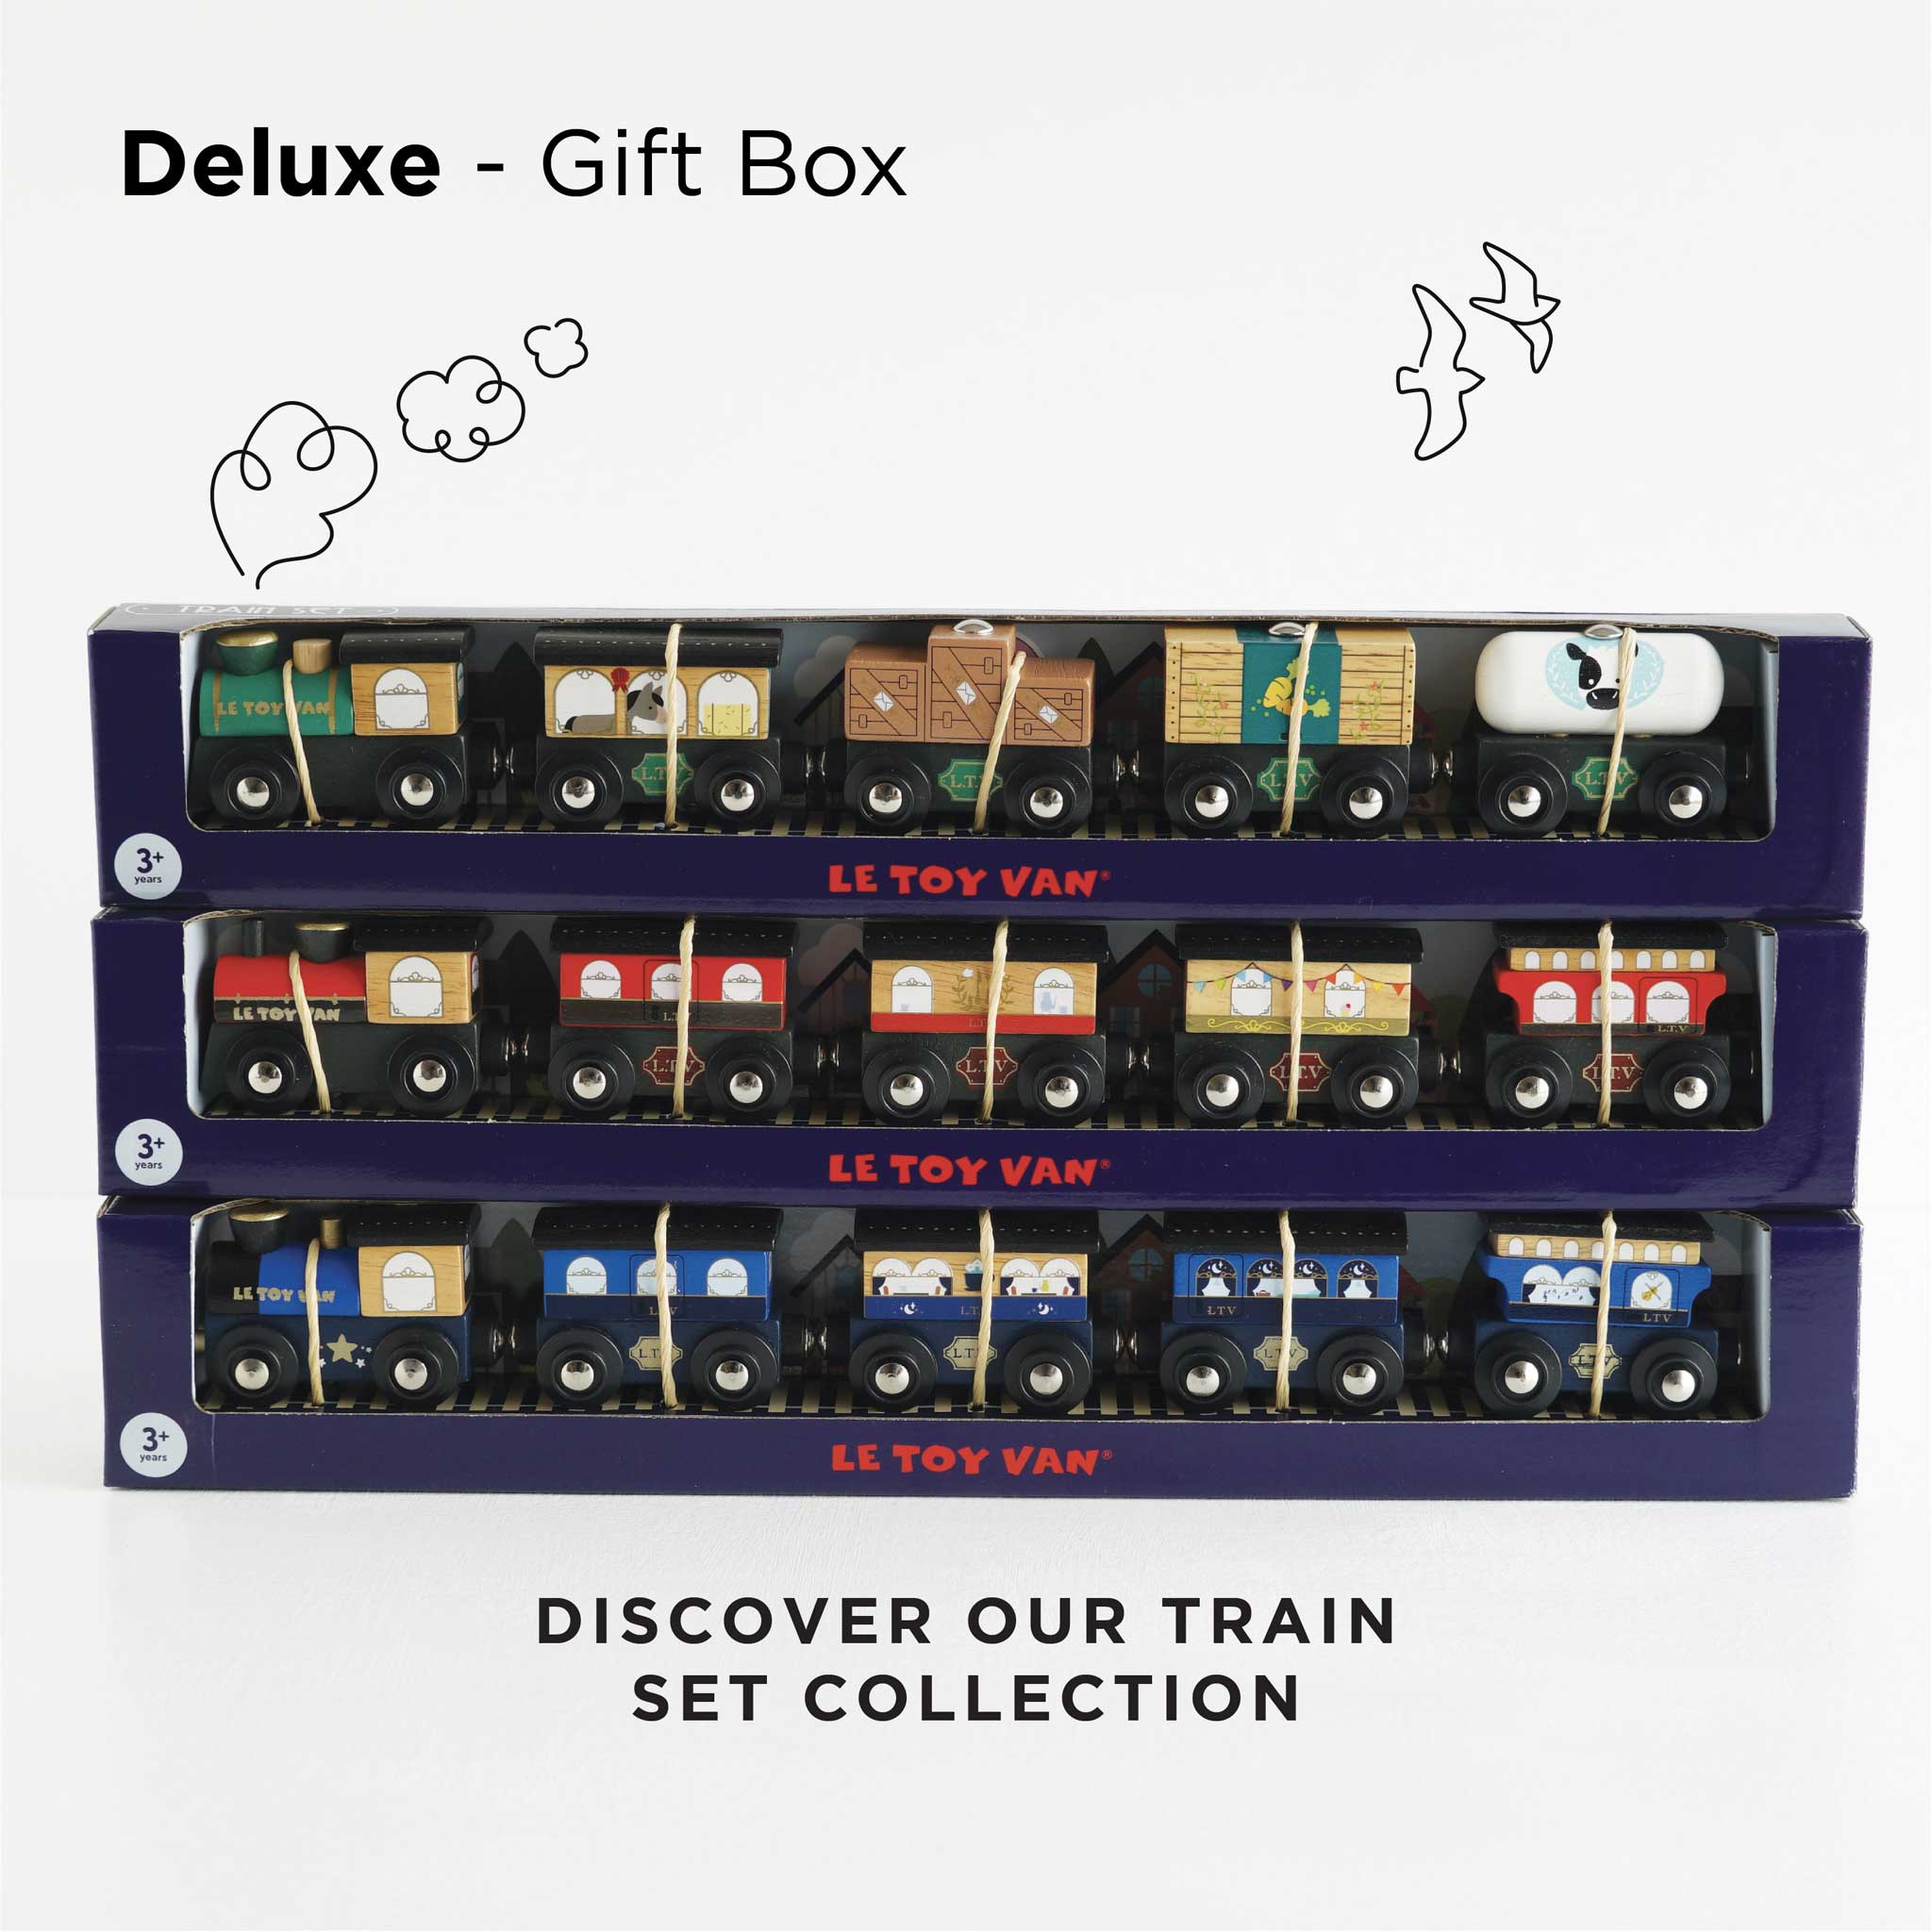 TV712-twilight-train-deluxe-gift-packaging